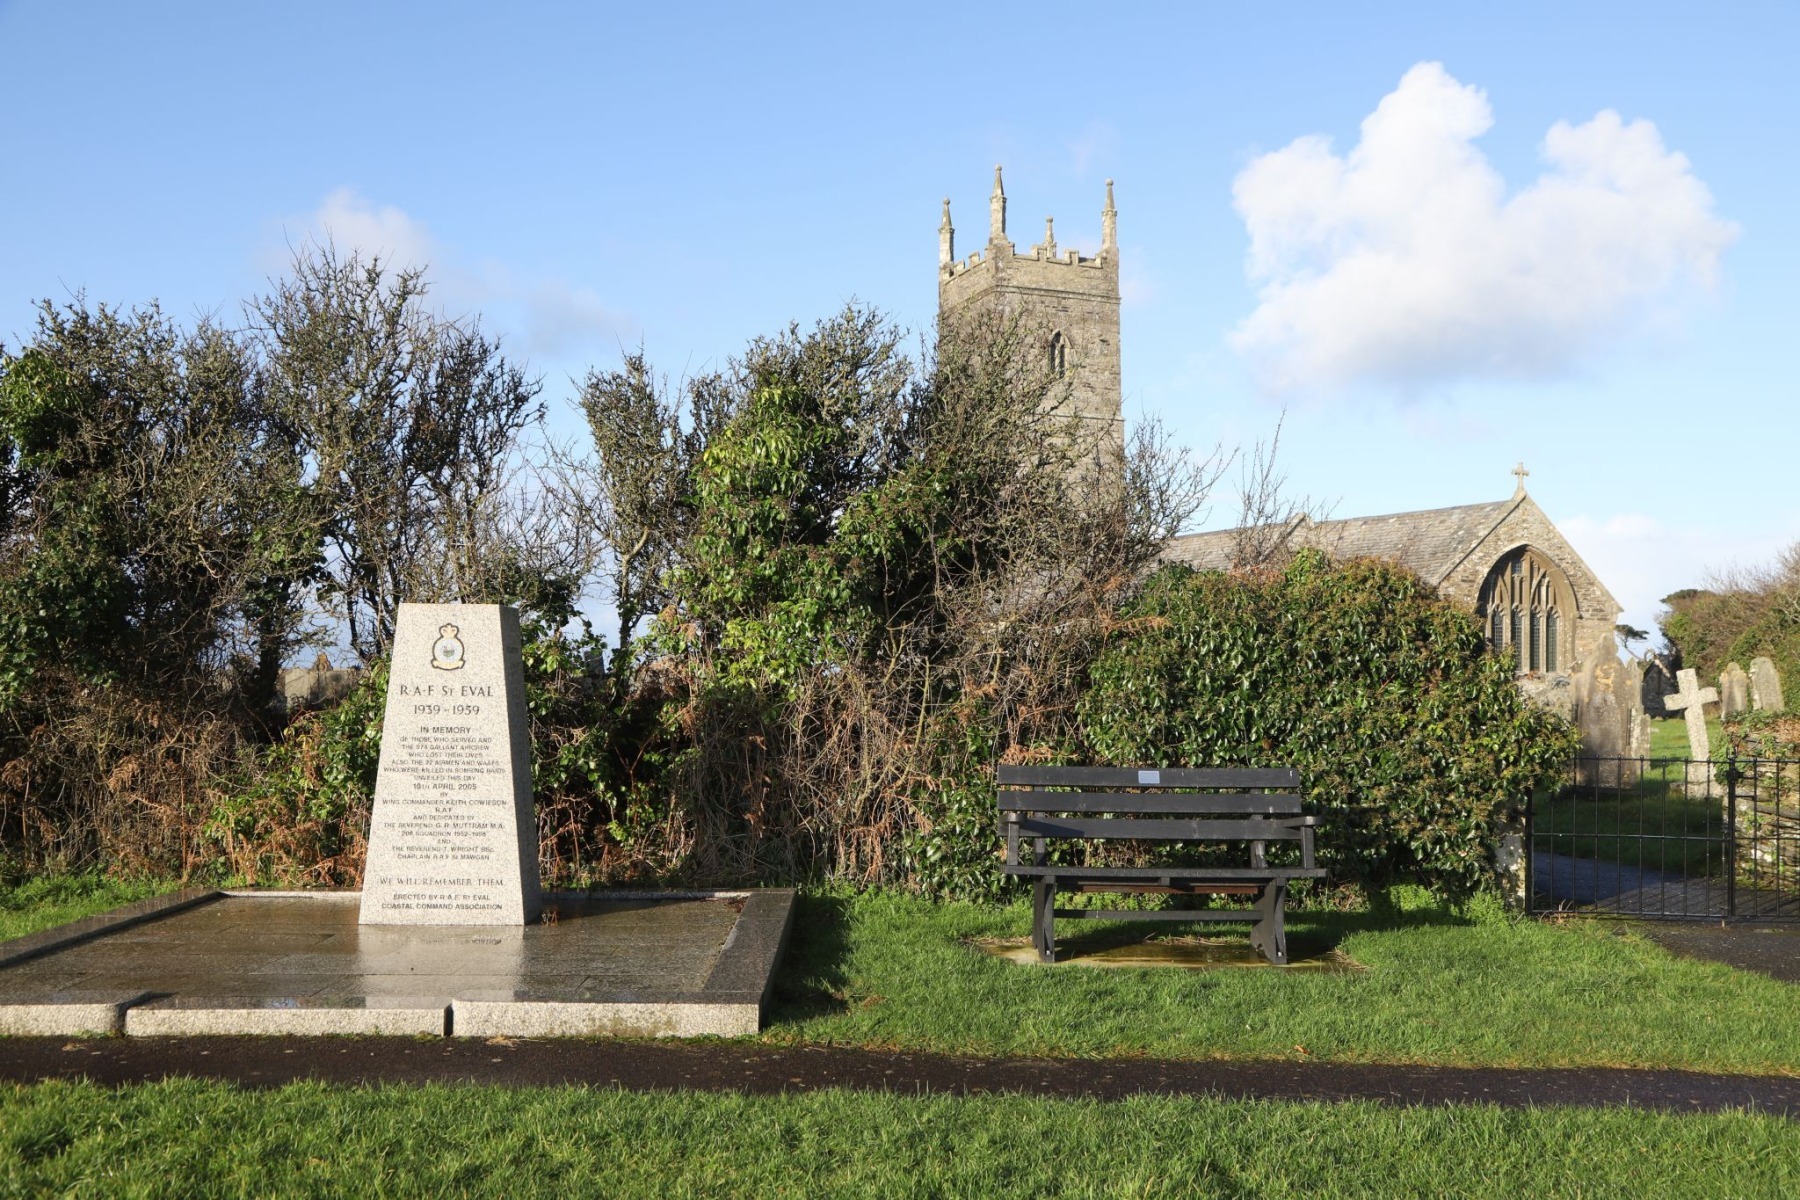 RAF St. Eval memorial, St. Eval Parish Church near Newquay in Cornwall